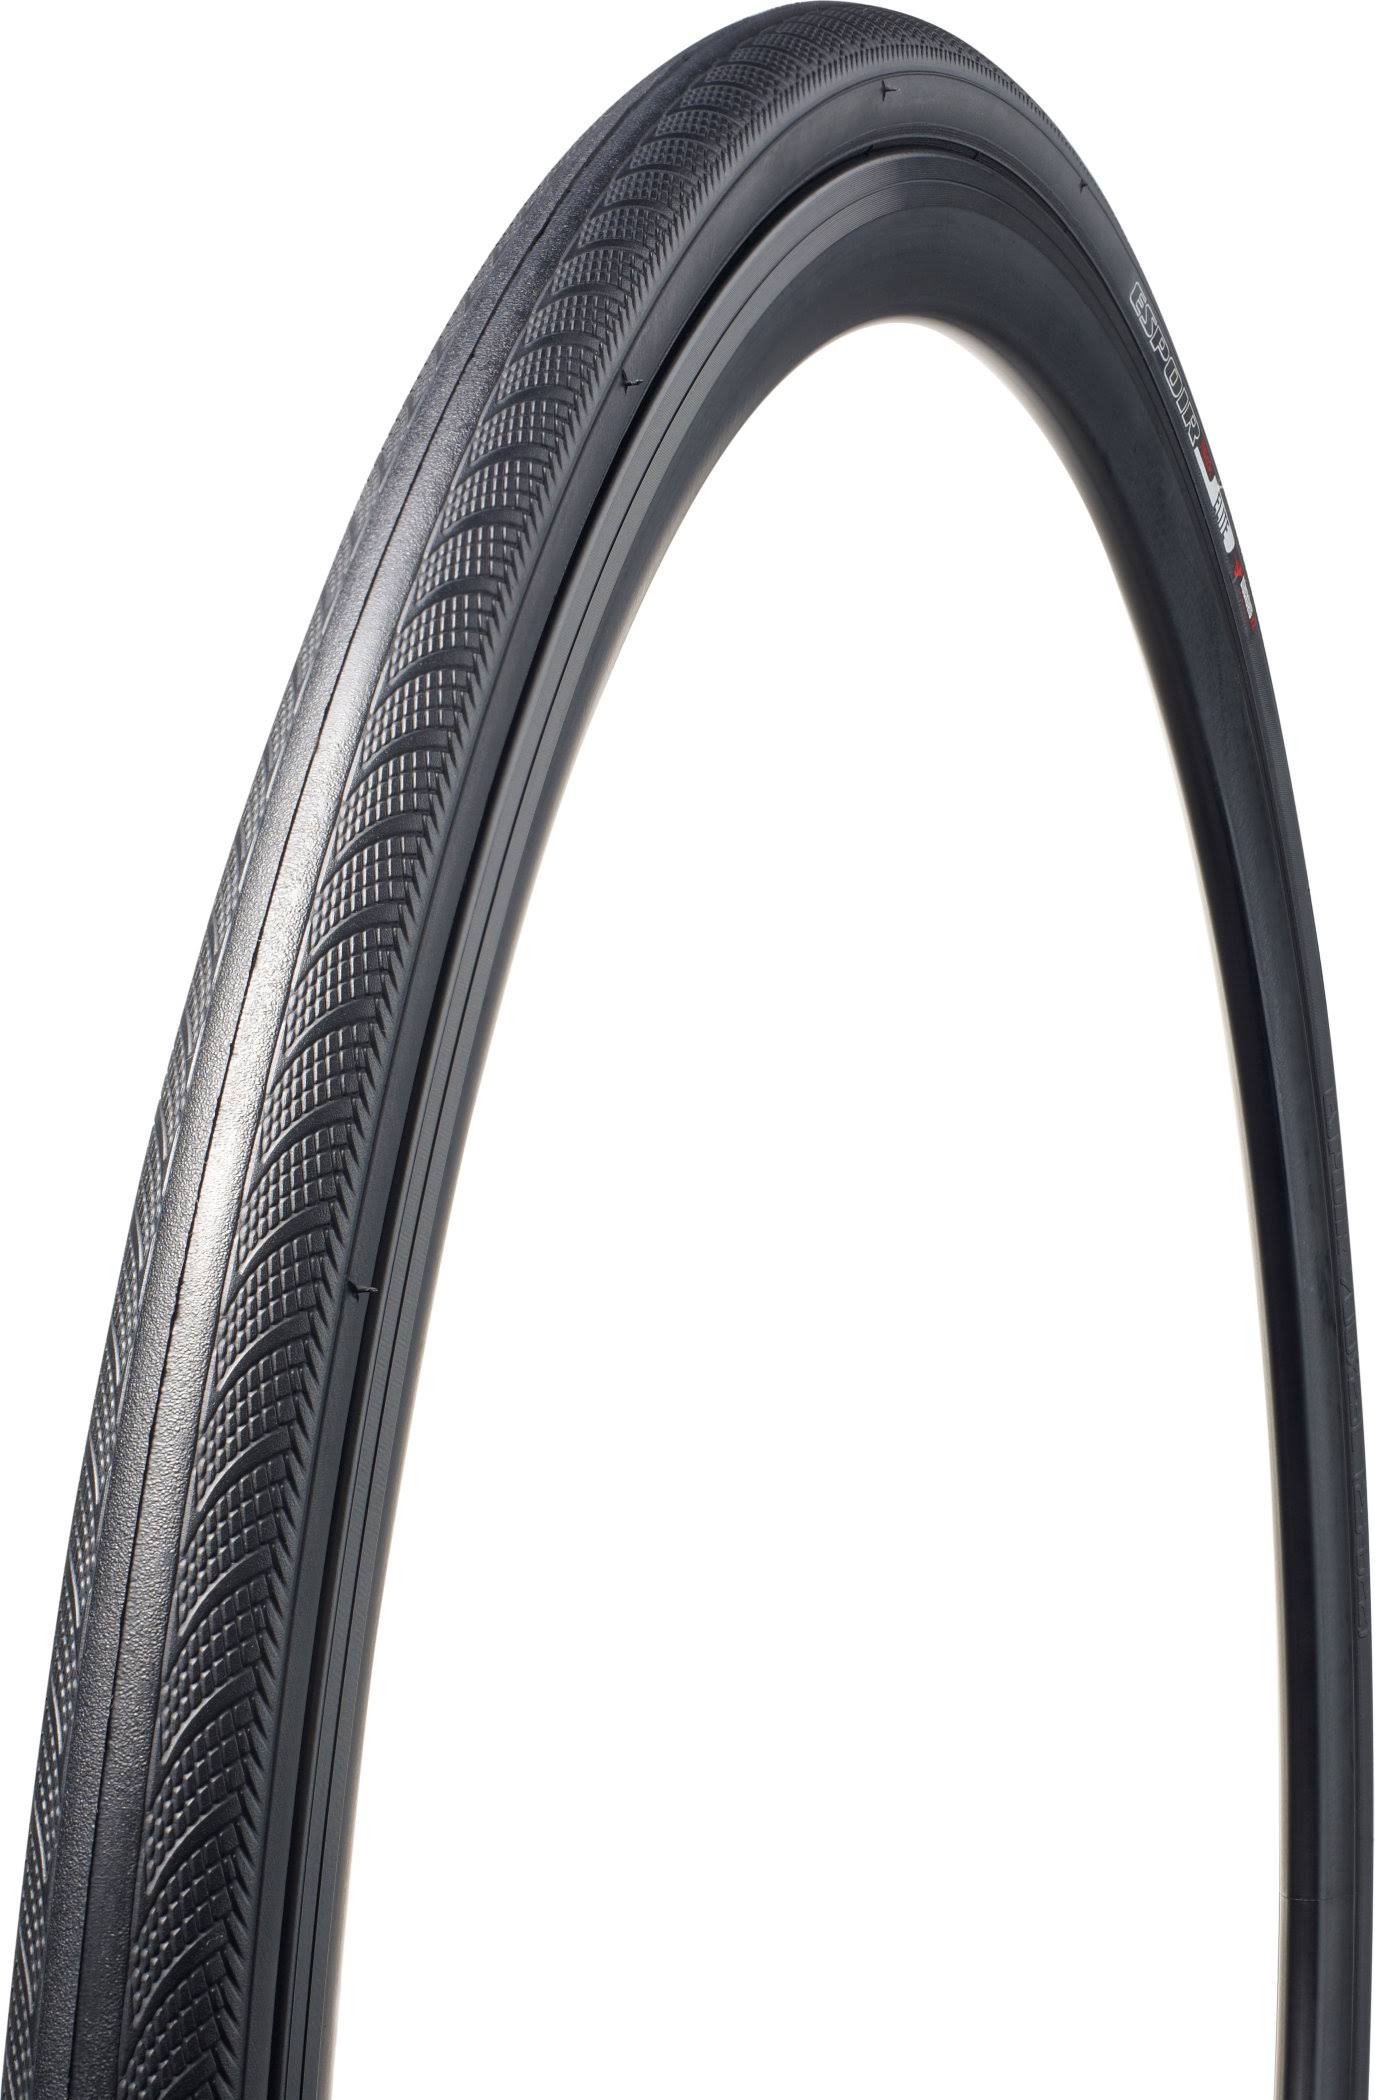 Specialized Espoir Sport Tyre - 700C, Black